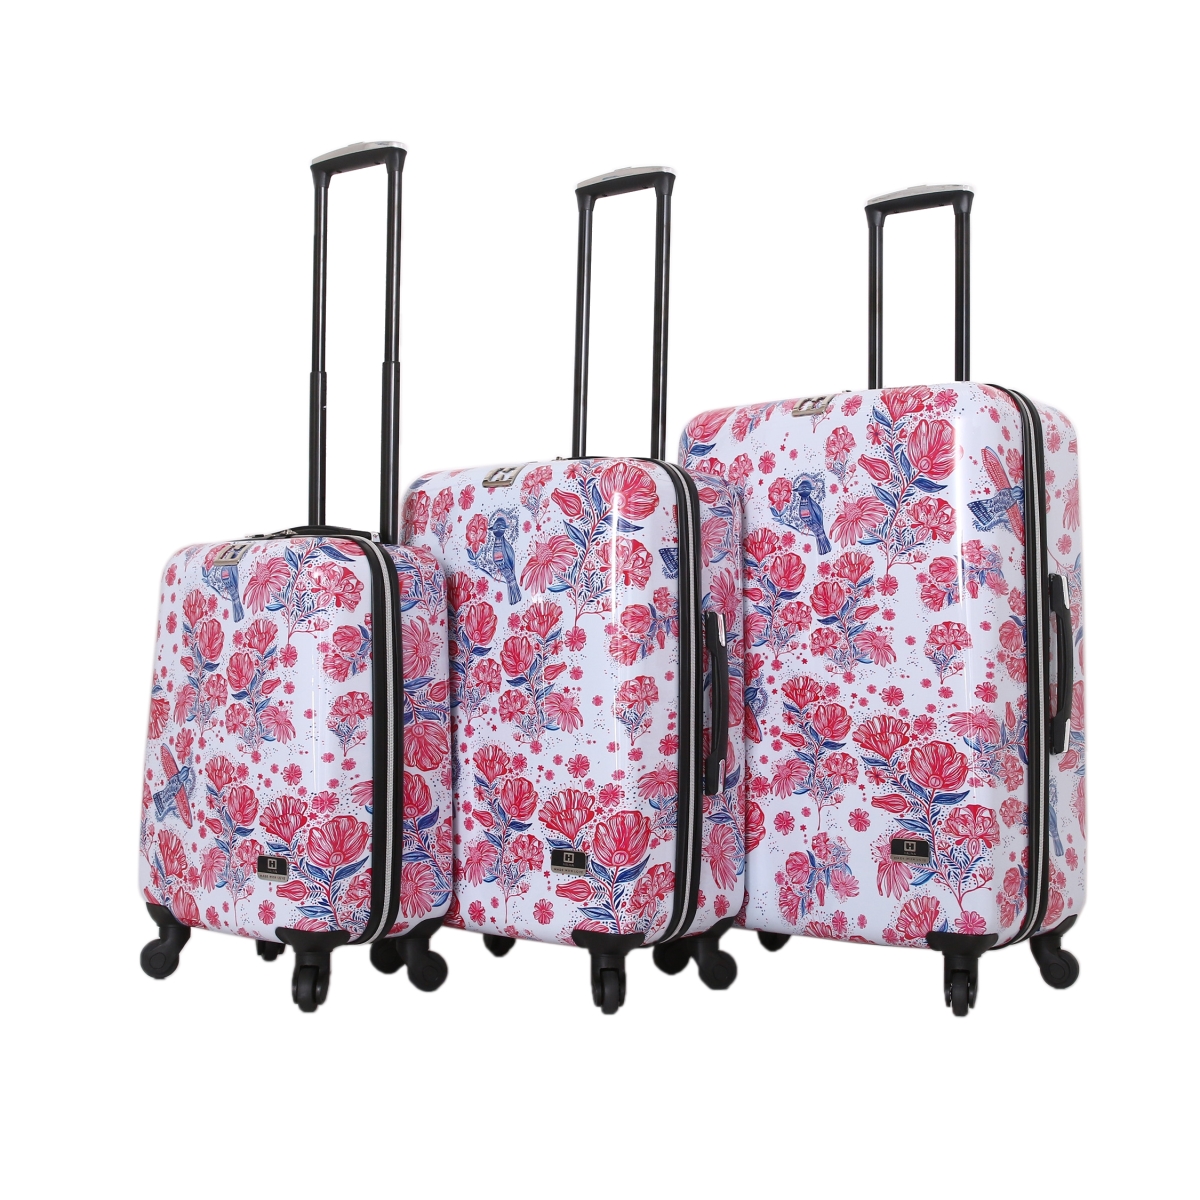 H1002-3pc-cflnn Car Pintos Fly Floral Luggage Set, Multicolor - 3 Piece